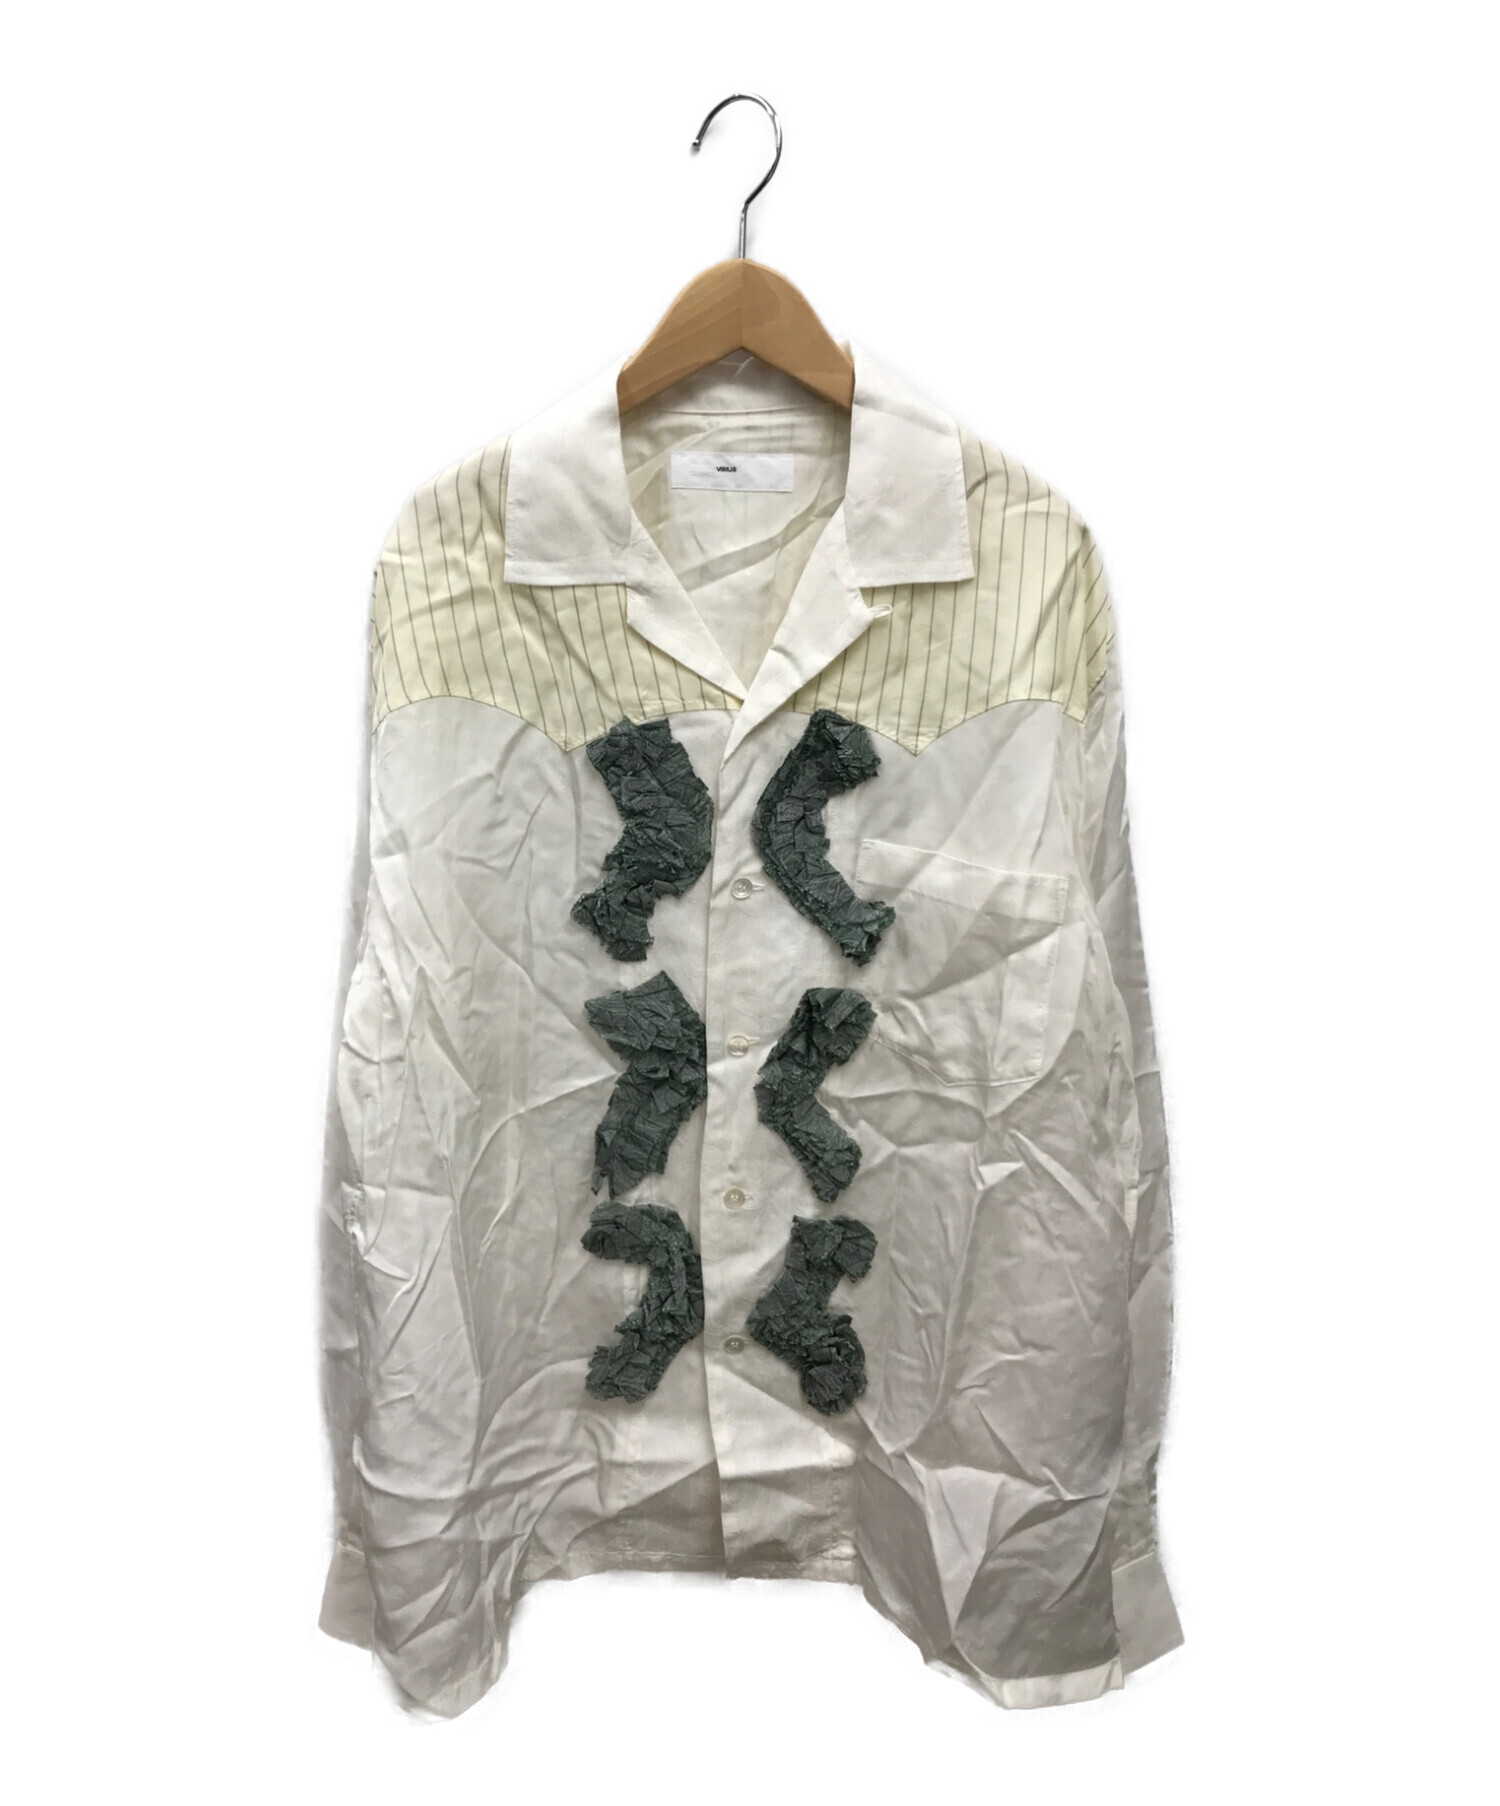 TOGA VIRILIS (トーガ ビリリース) キュプラジャガードシャツ アイボリー×ホワイト サイズ:46